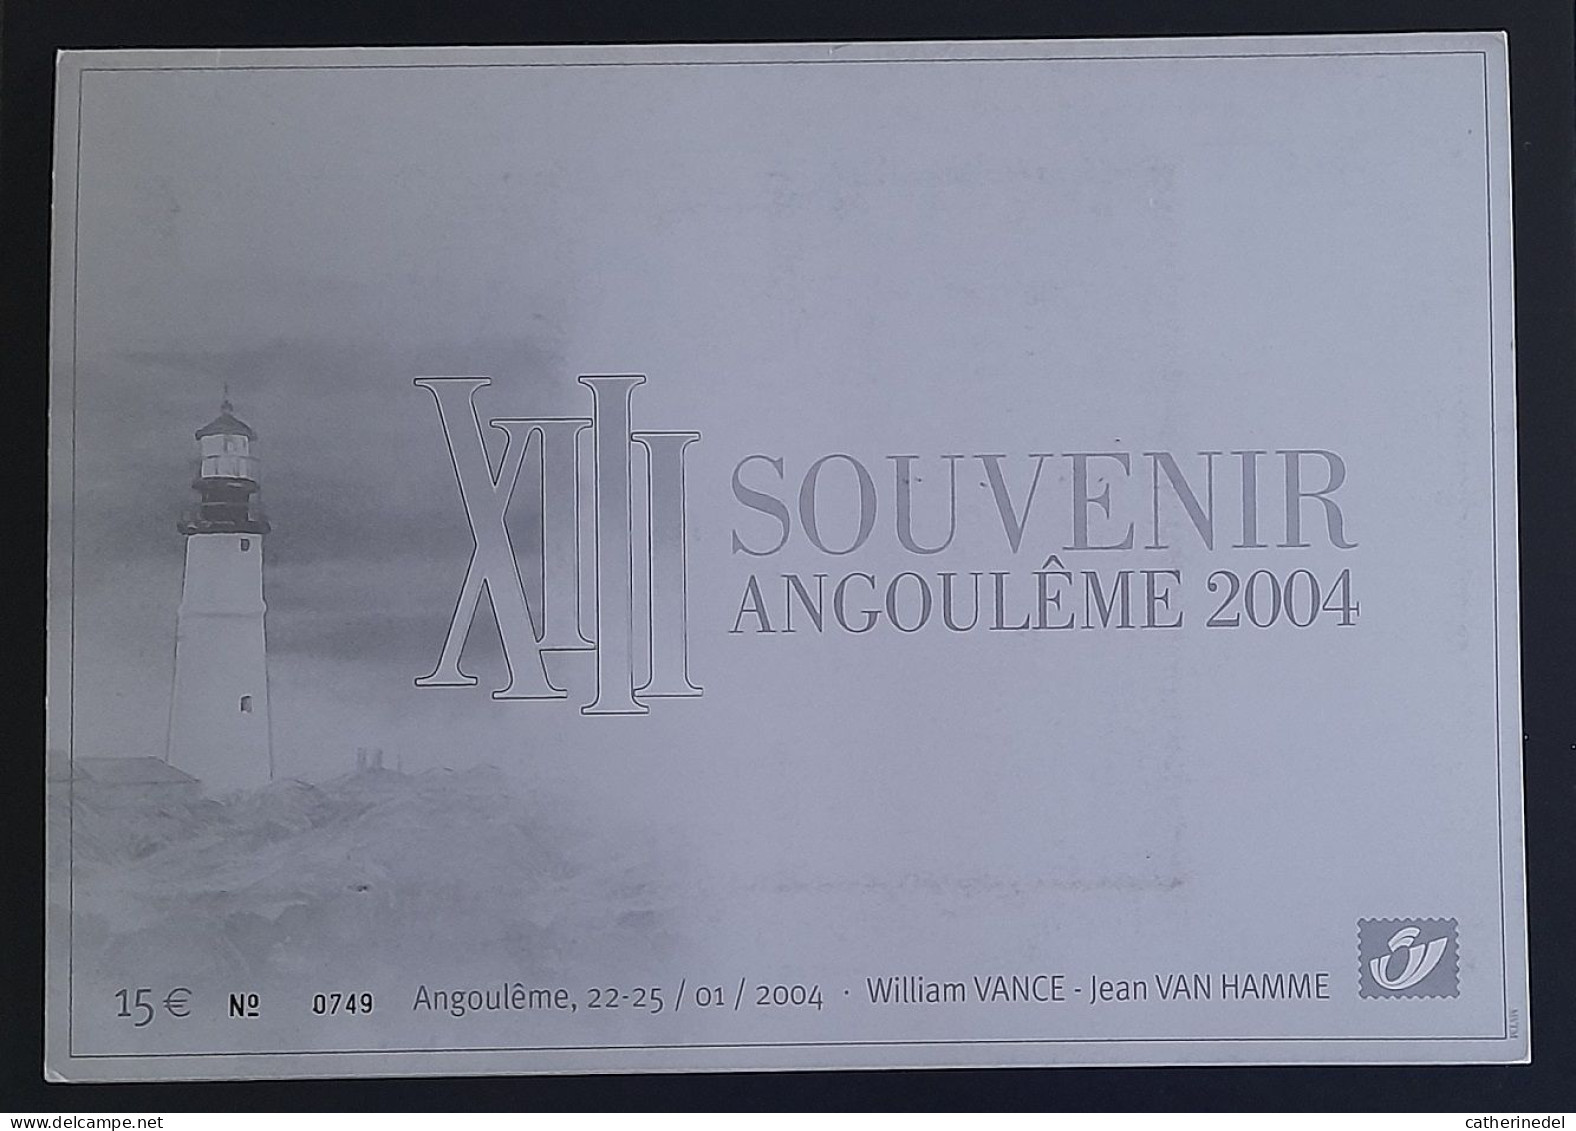 Année 2004 : 3233 - Pochette Souvenir Angoulème 2004 XIII - William VANCE - Jean VAN HAMME - Numérotée 0749 - Philabédés (cómics)